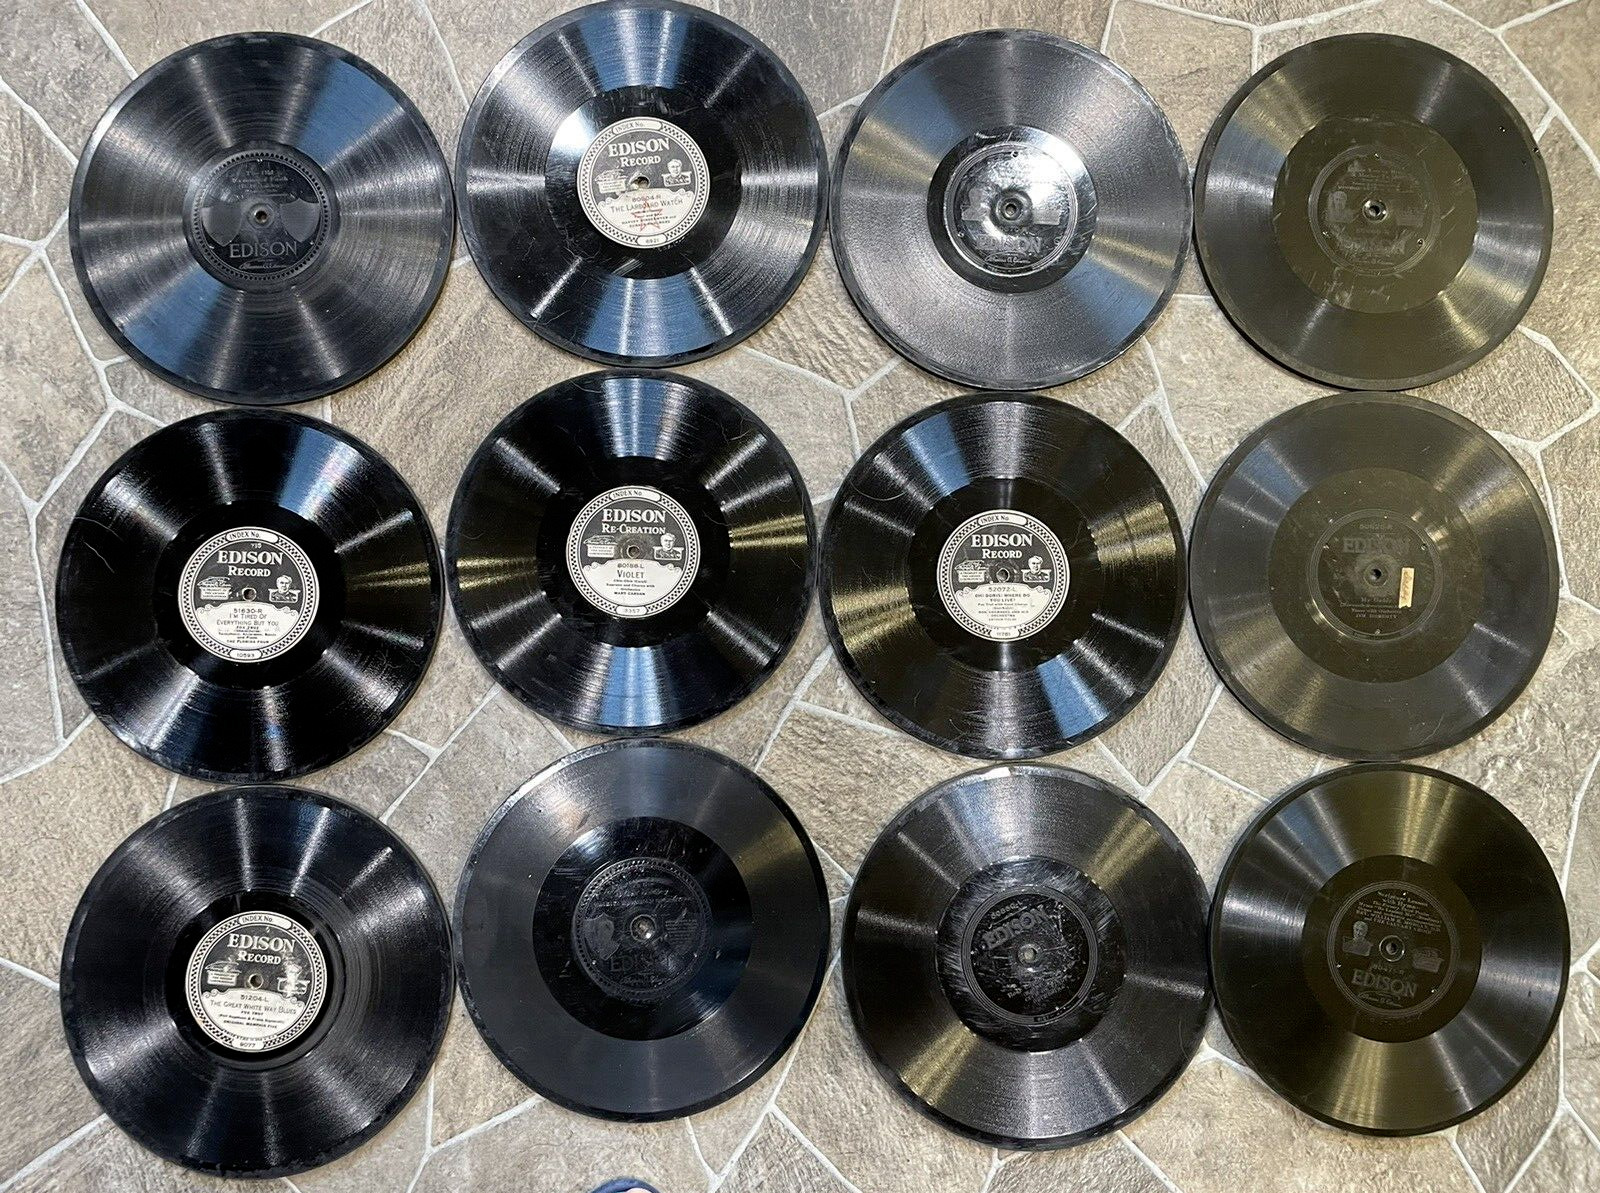 Lot of 12 Edison RECORDS Thick ANTIQUE VINTAGE 78 RPM